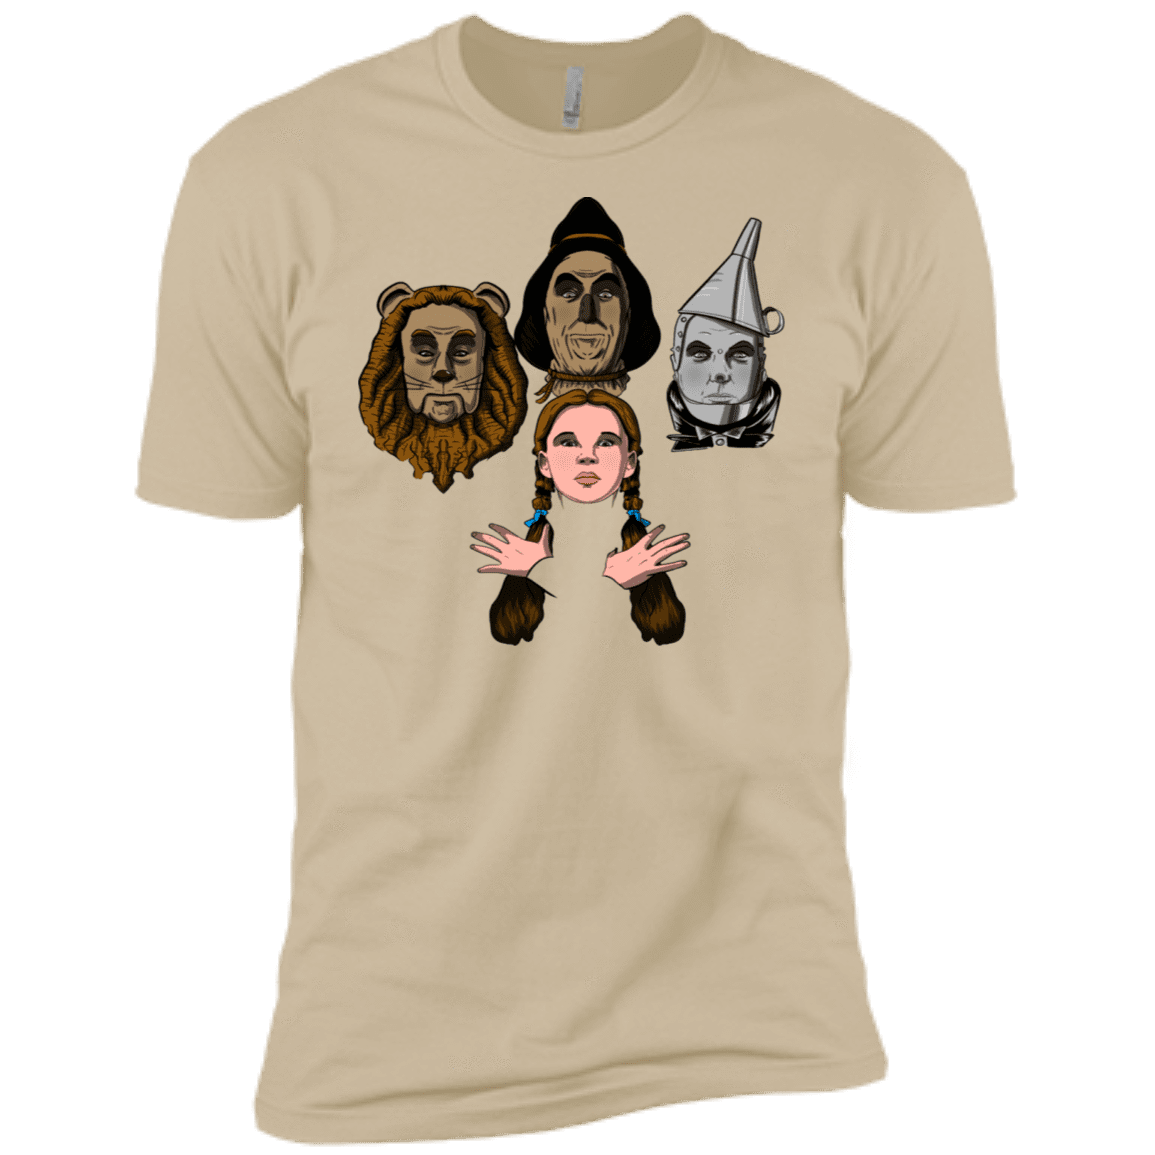 T-Shirts Sand / X-Small Oz Rhapsody Men's Premium T-Shirt